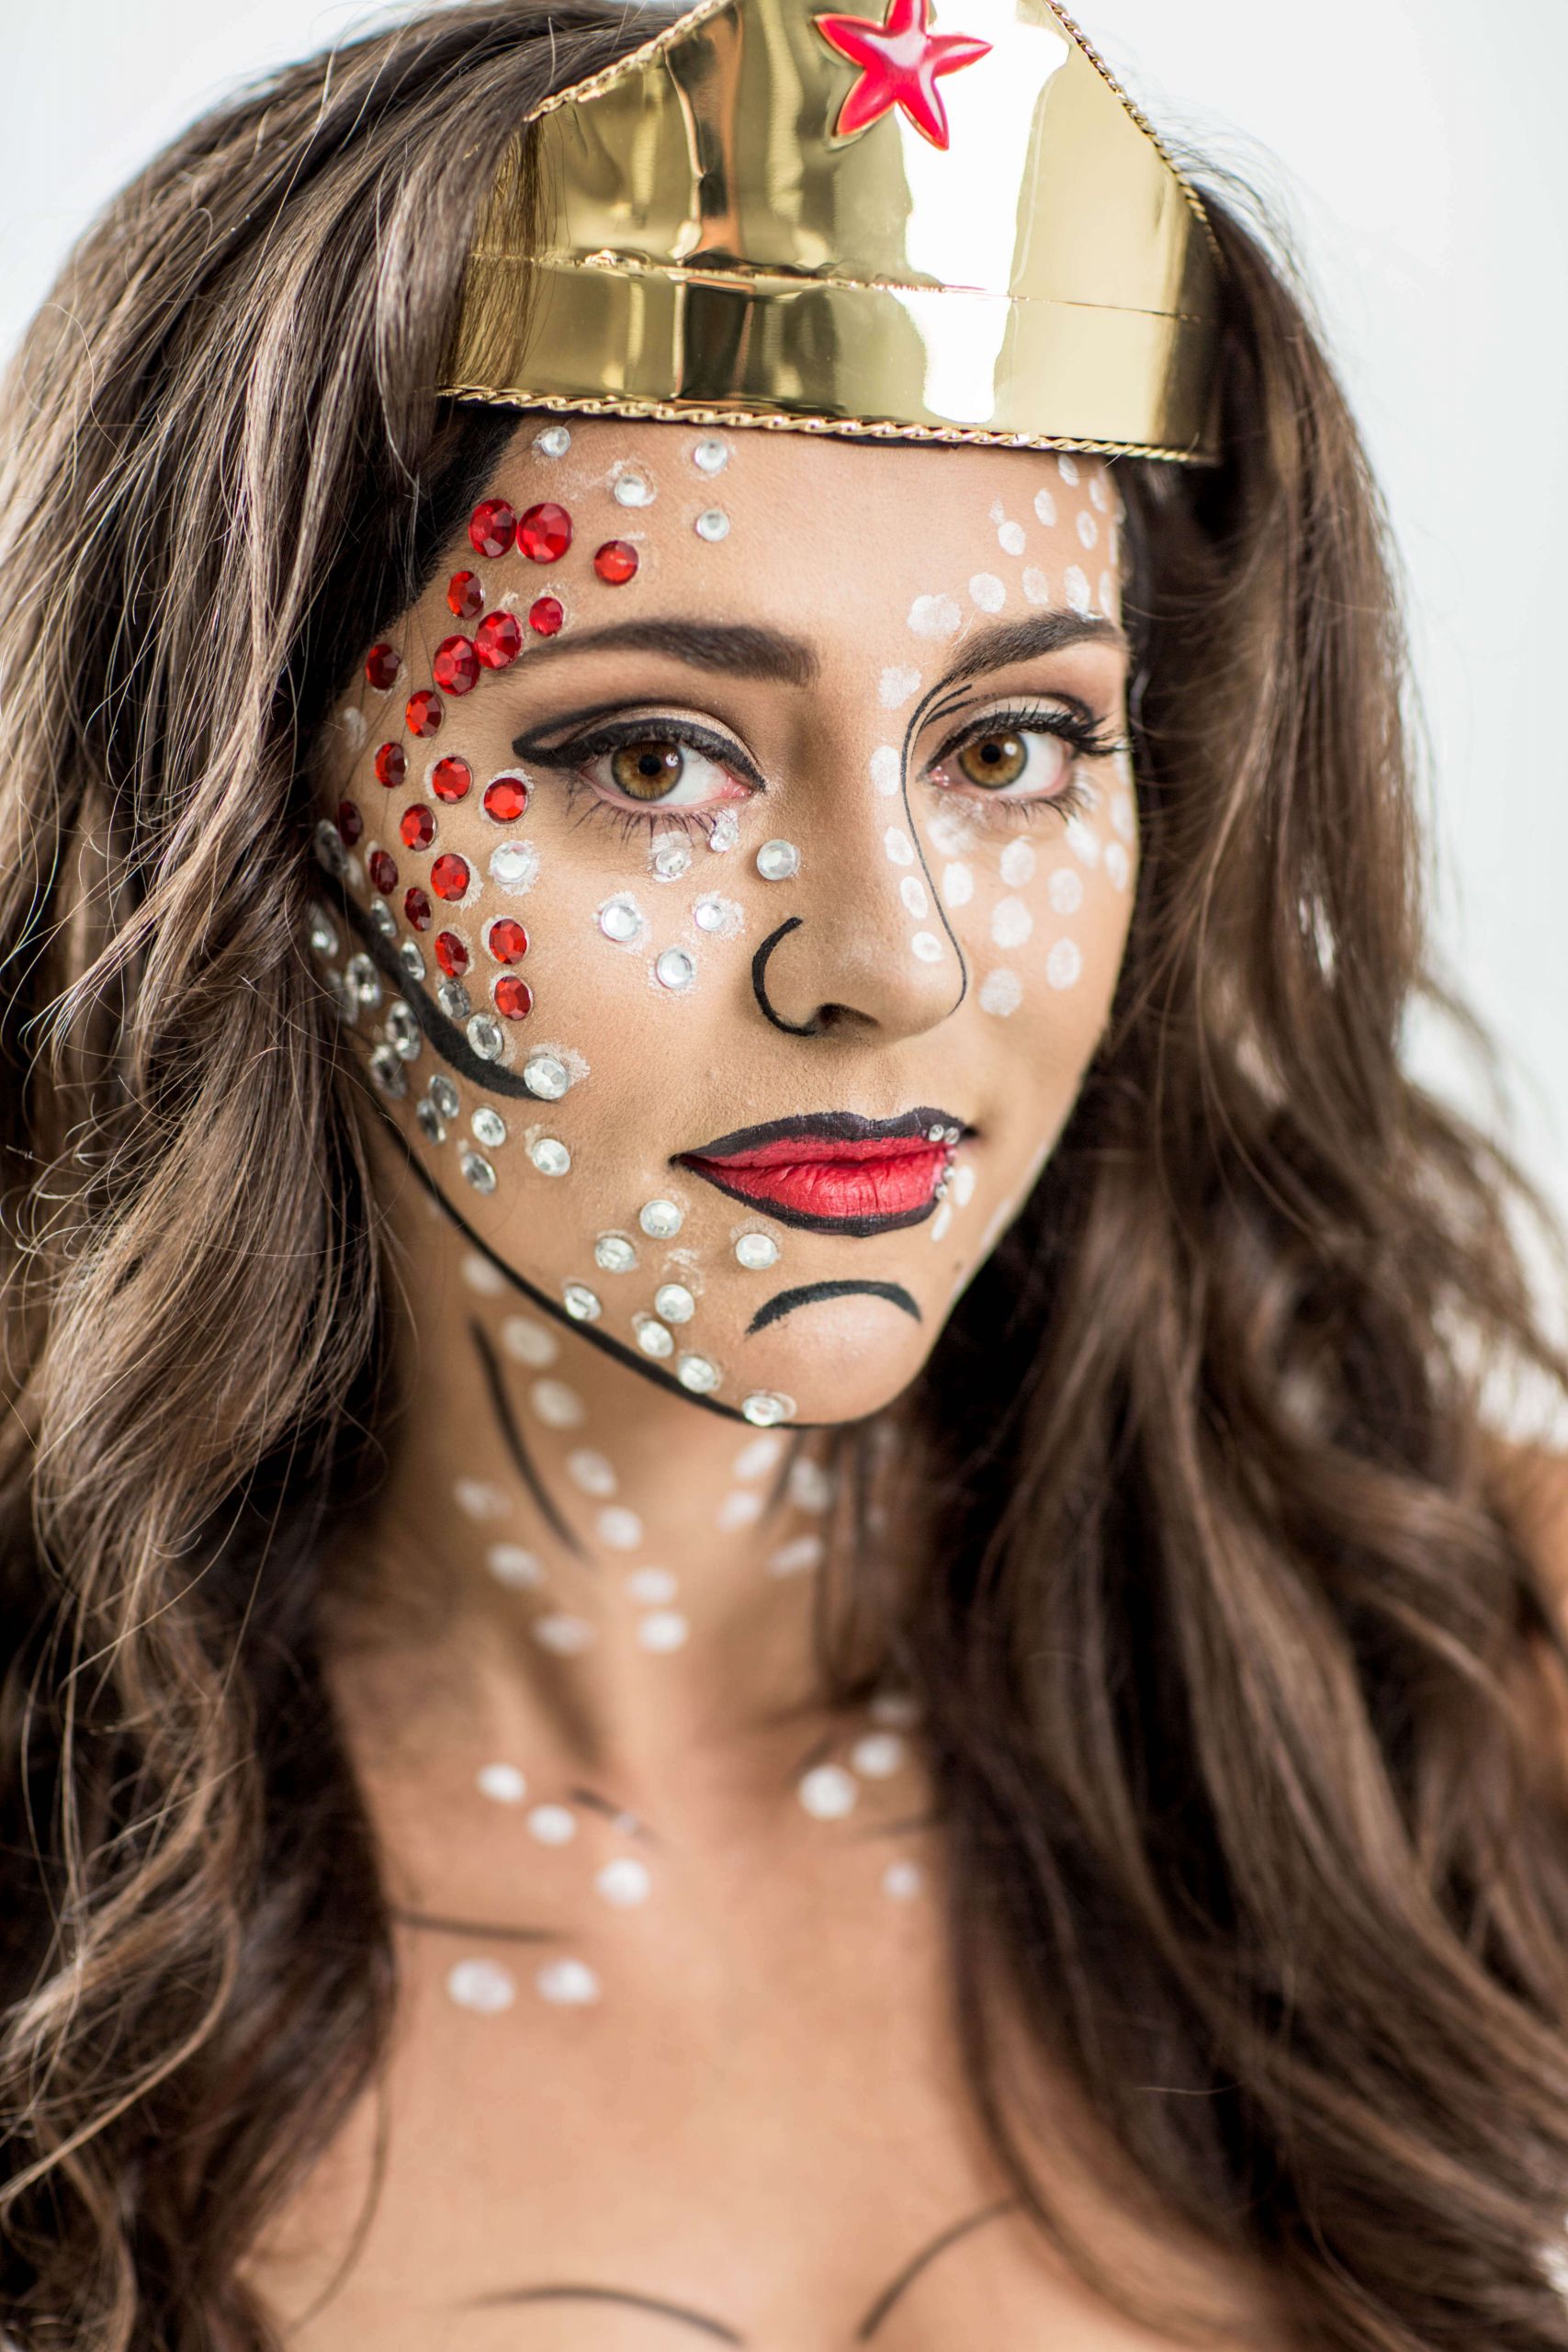 Artist Costume DIY
 DIY Wonder Woman Costume with Pop Art Makeup Tutorial